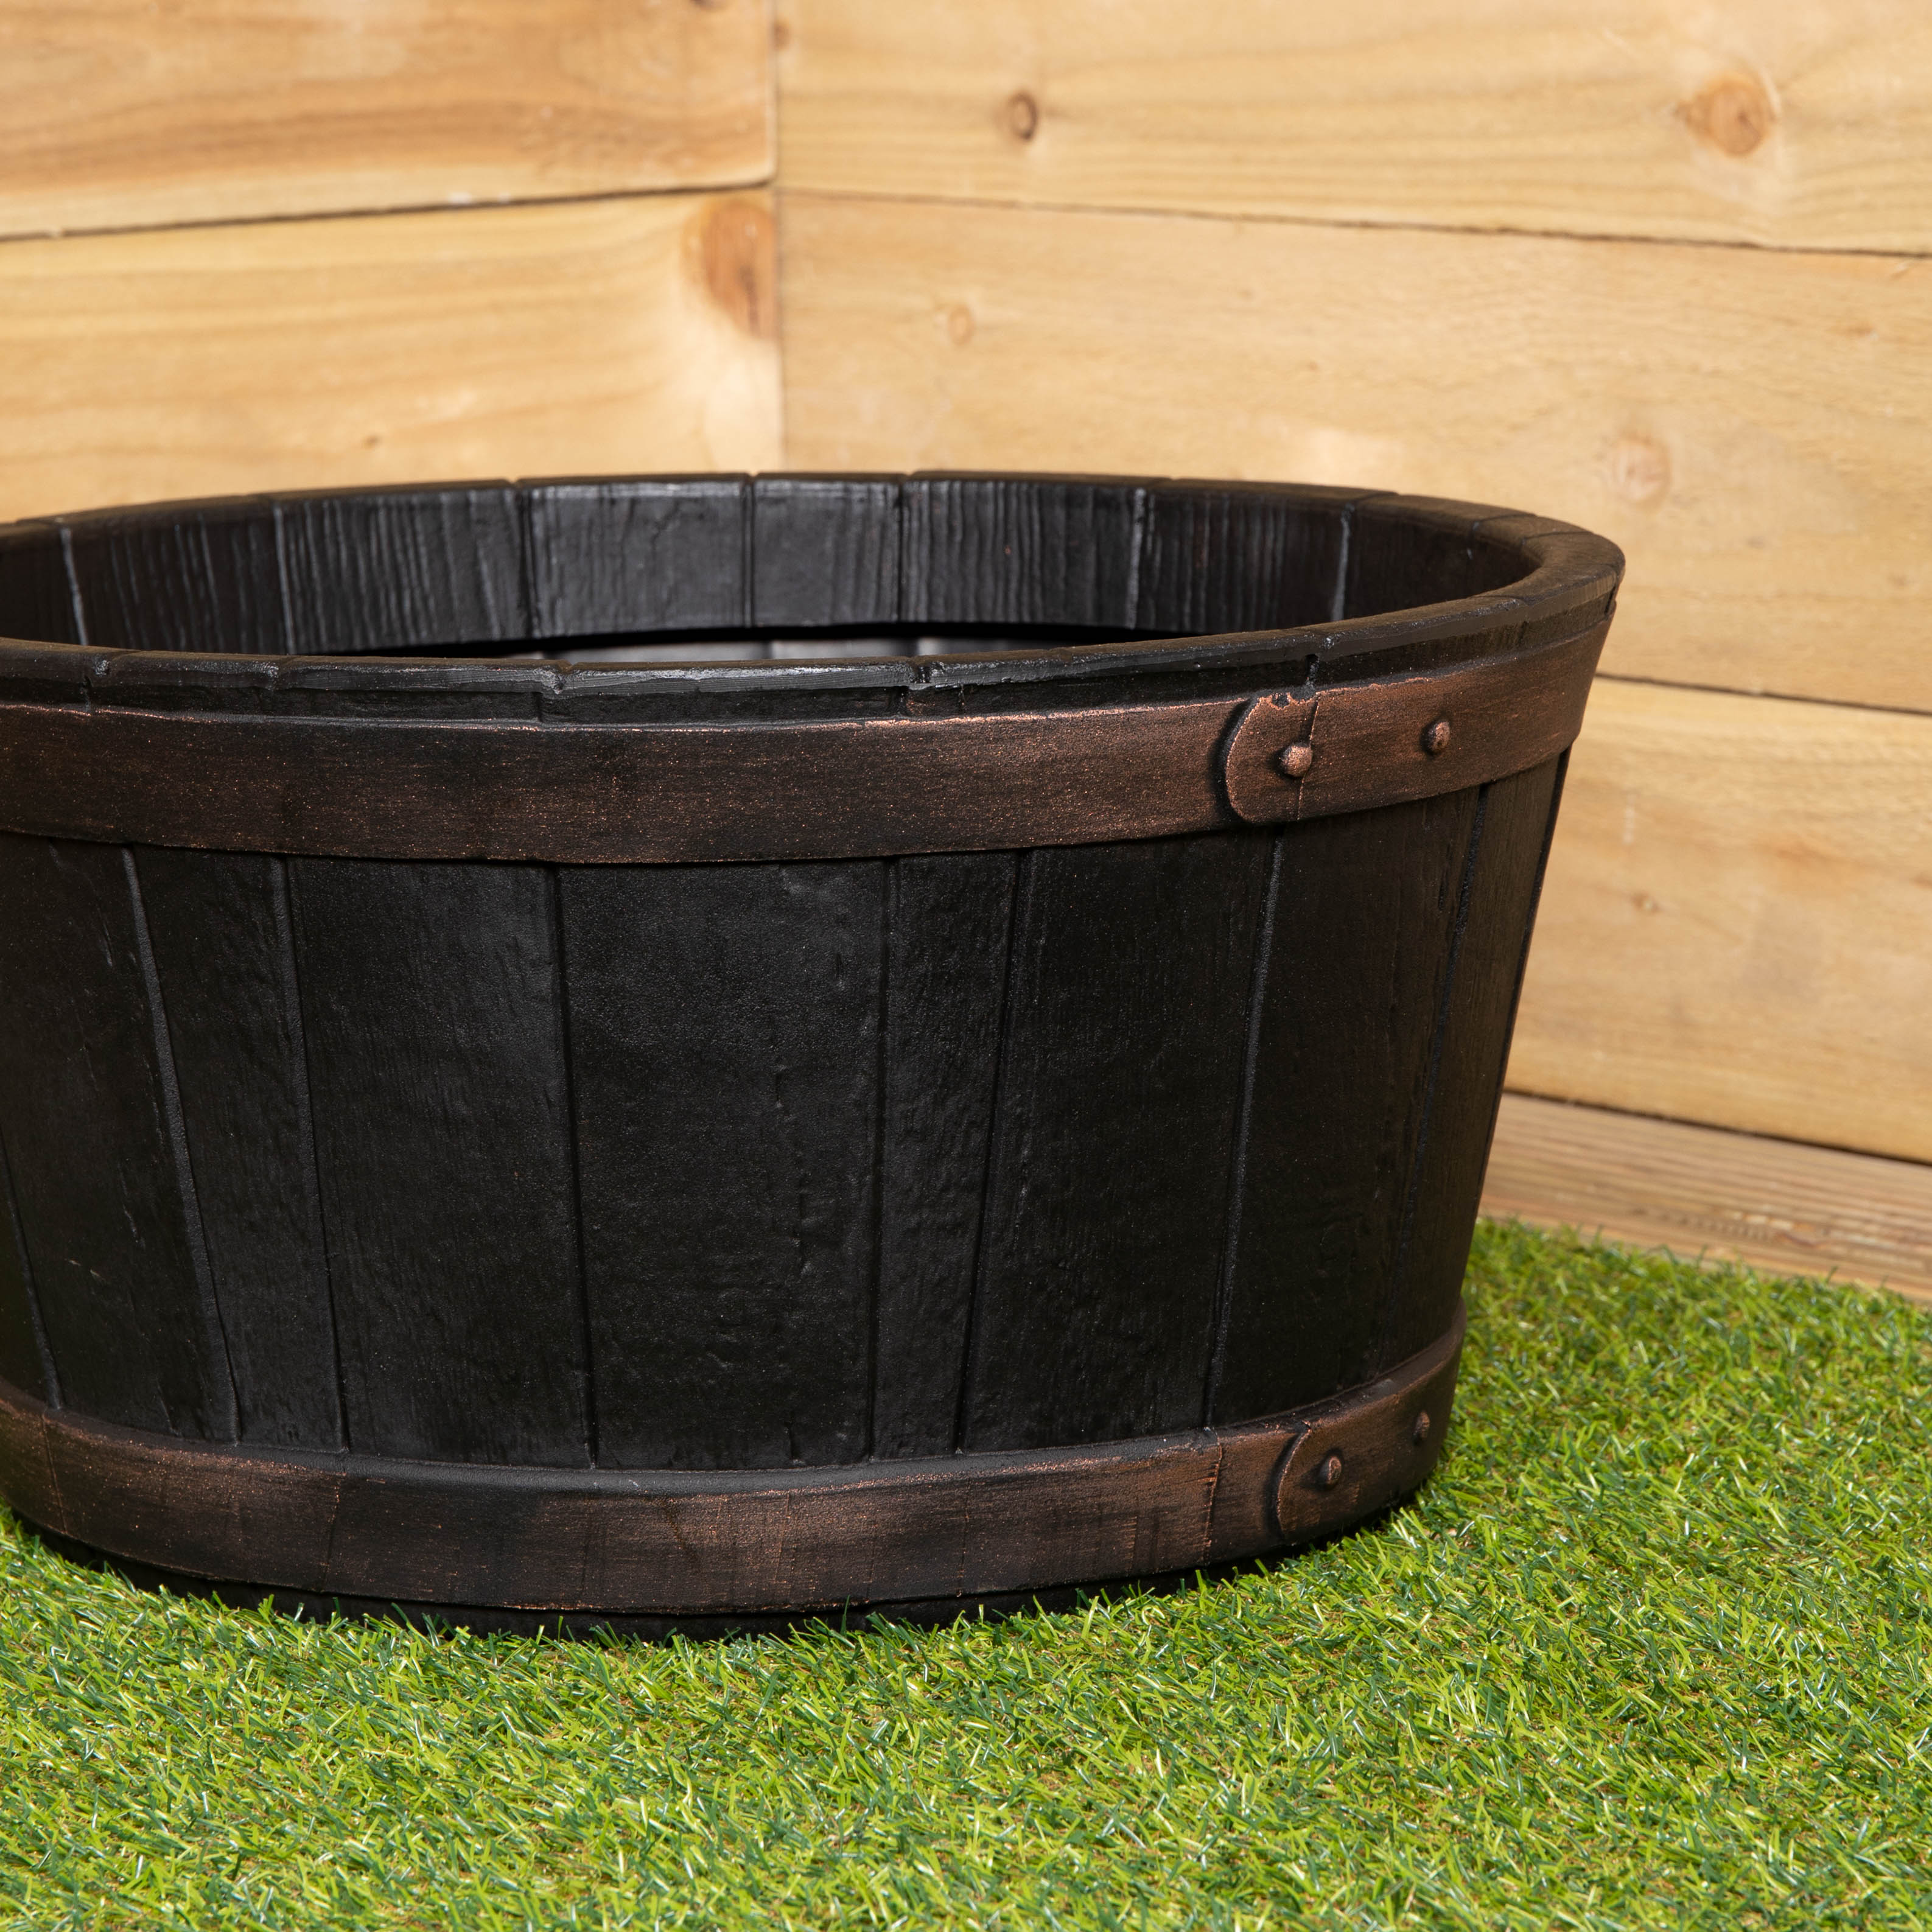 50cm Black Round Plastic Oak Wood Barrel Effect Decorative Garden Patio Planter